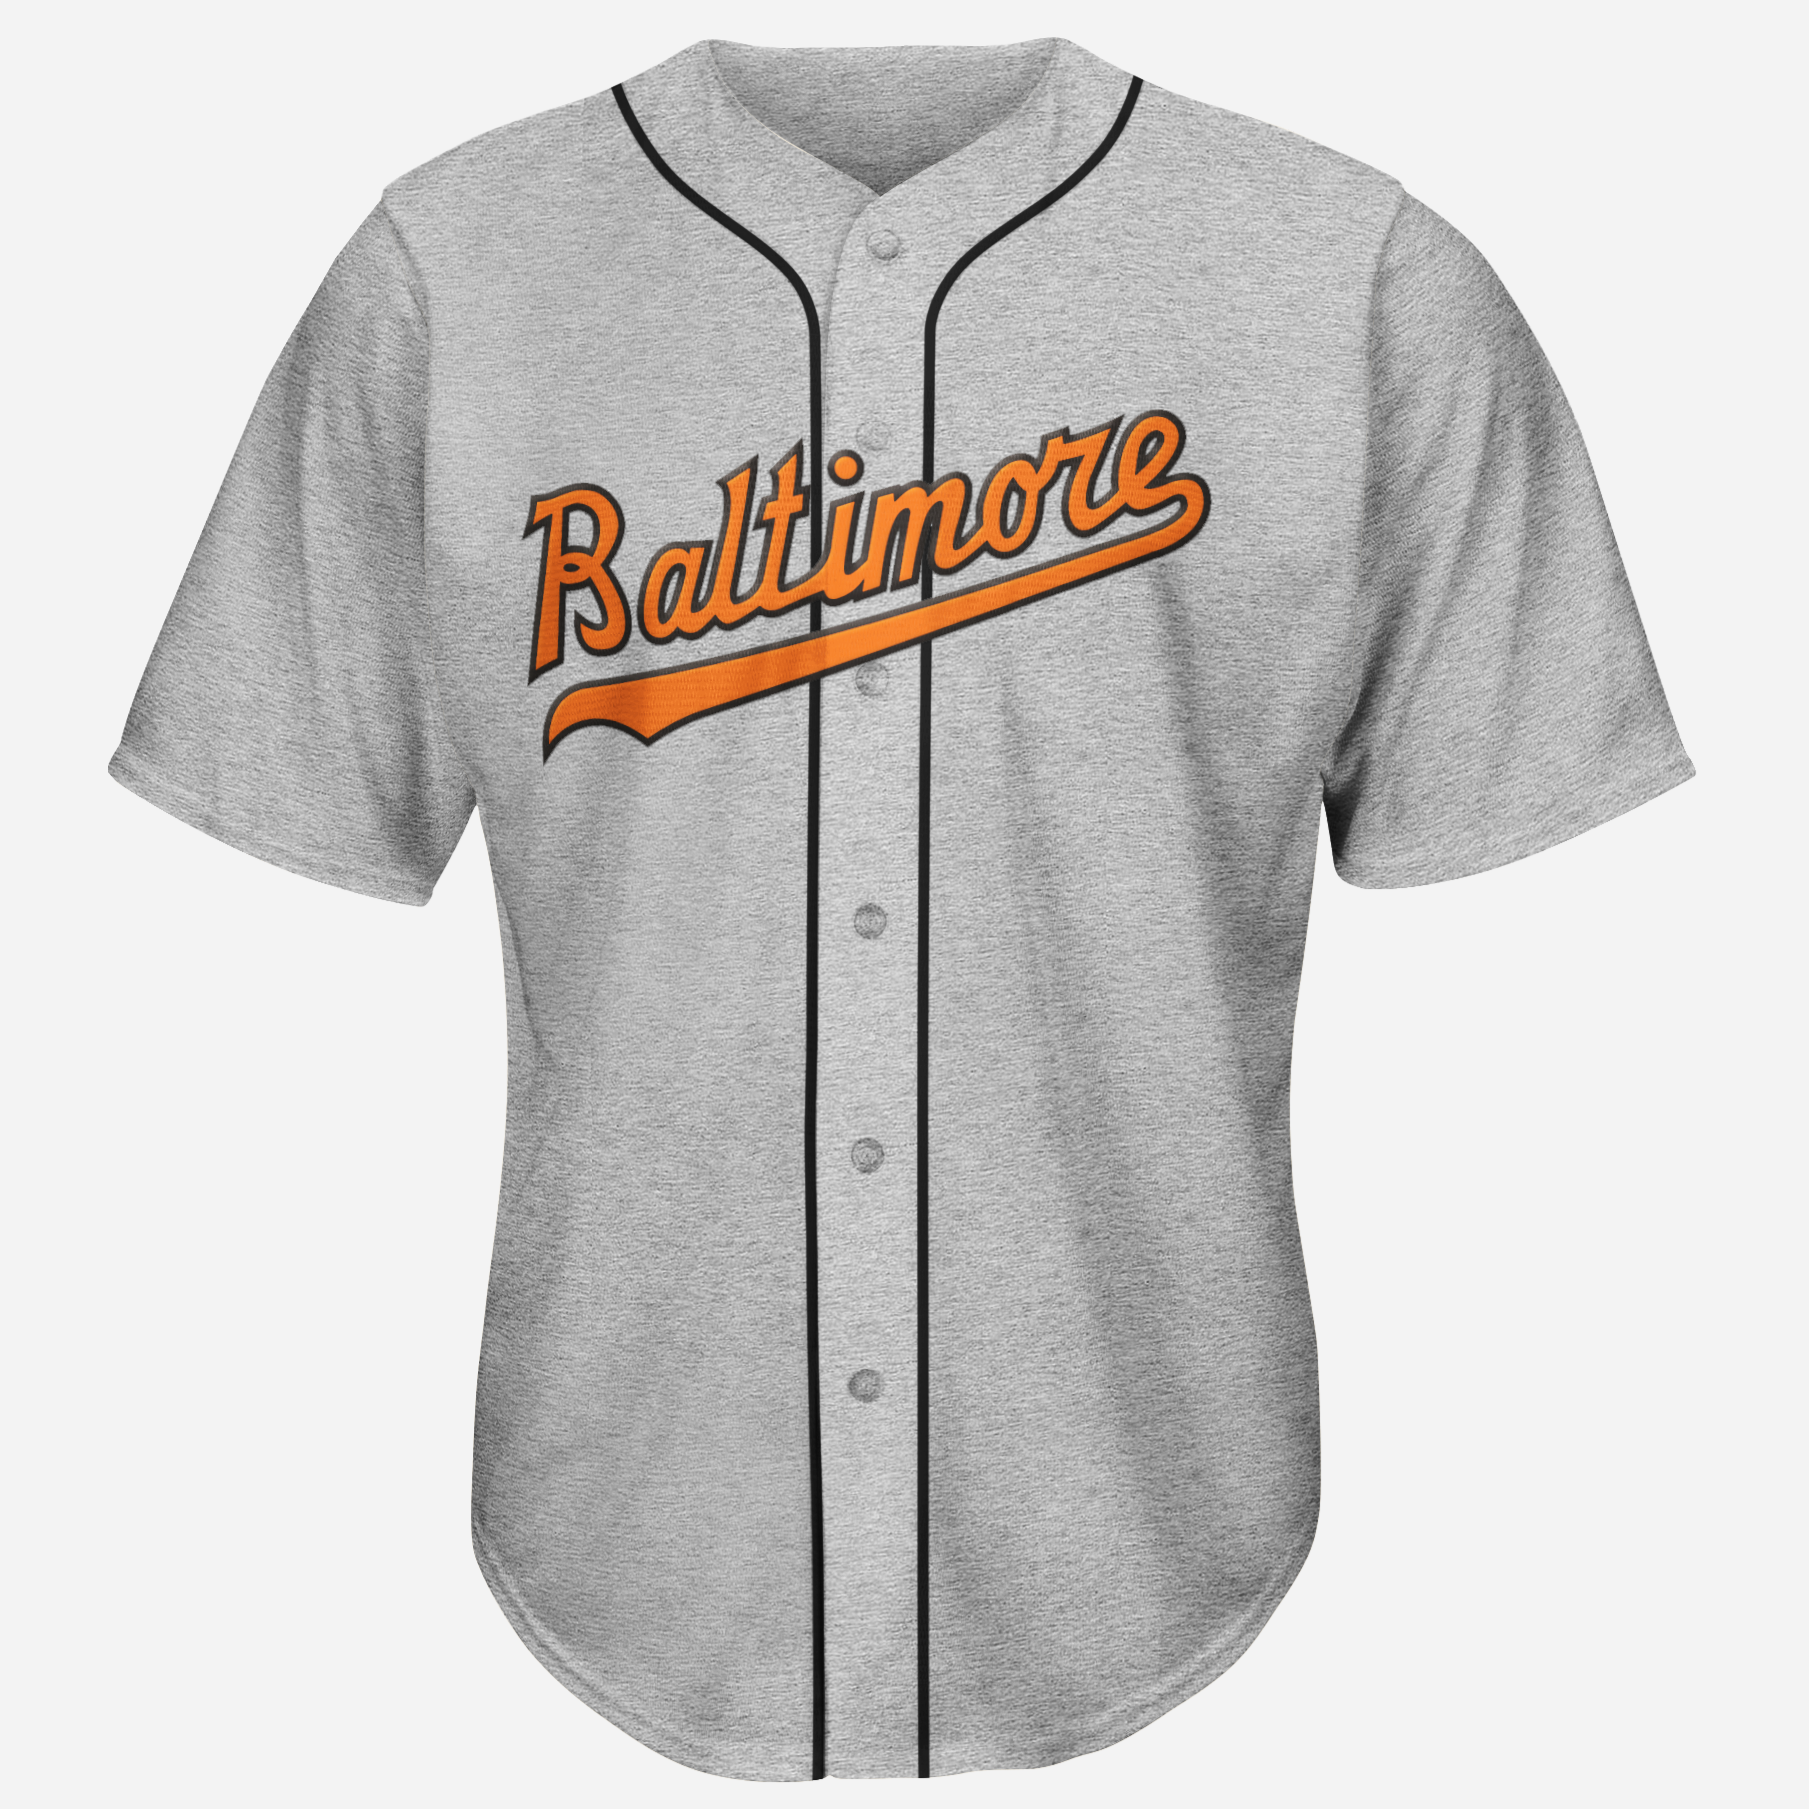 Baltimore Baseball Jersey - Gray - 3XL - Royal Retros